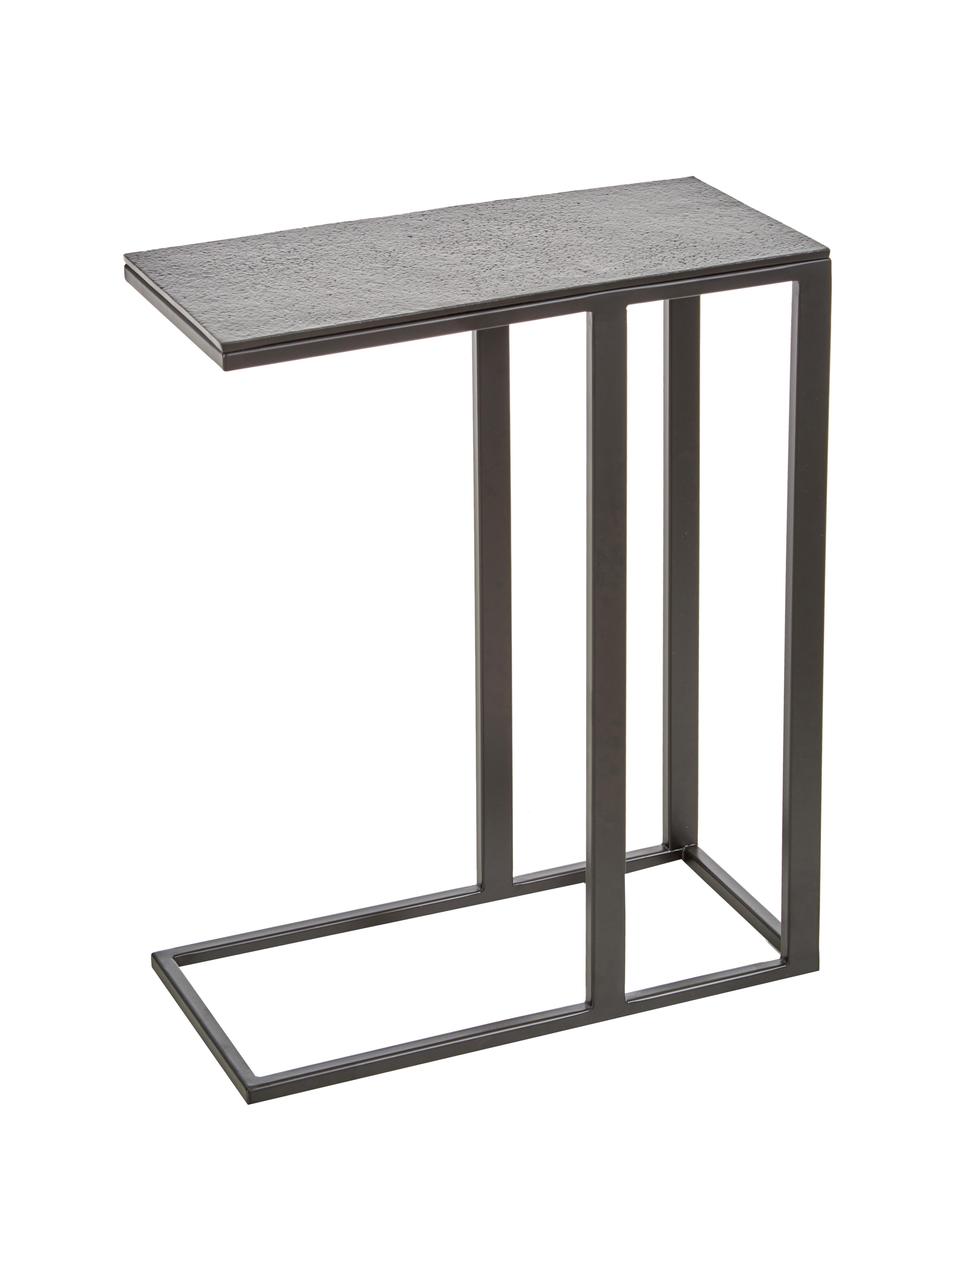 Beistelltisch Edge im Industrial Design, Tischplatte: Metall, beschichtet, Gestell: Metall, pulverbeschichtet, Tischplatte: Schwarz Gestell: Schwarz, matt, B 45 x H 62 cm